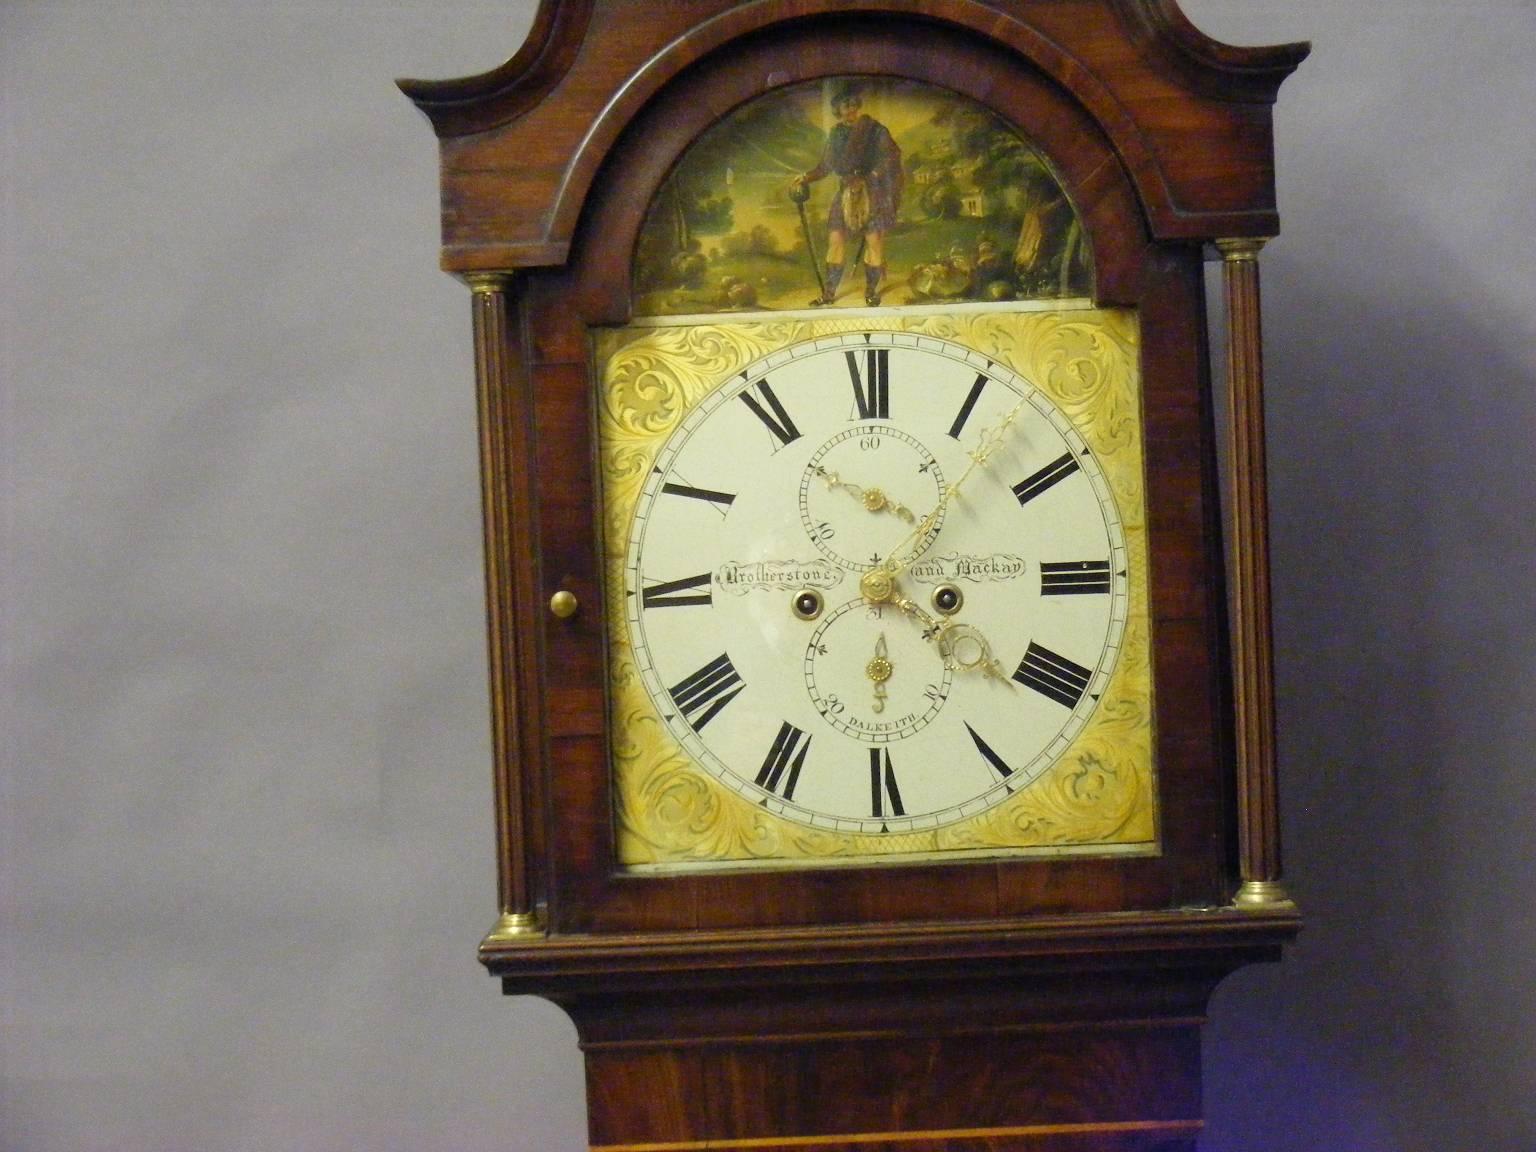 George IV Scottish Mahogany Grandfather Clock by Brotherston Mackay, Dalkeith, circa 1830